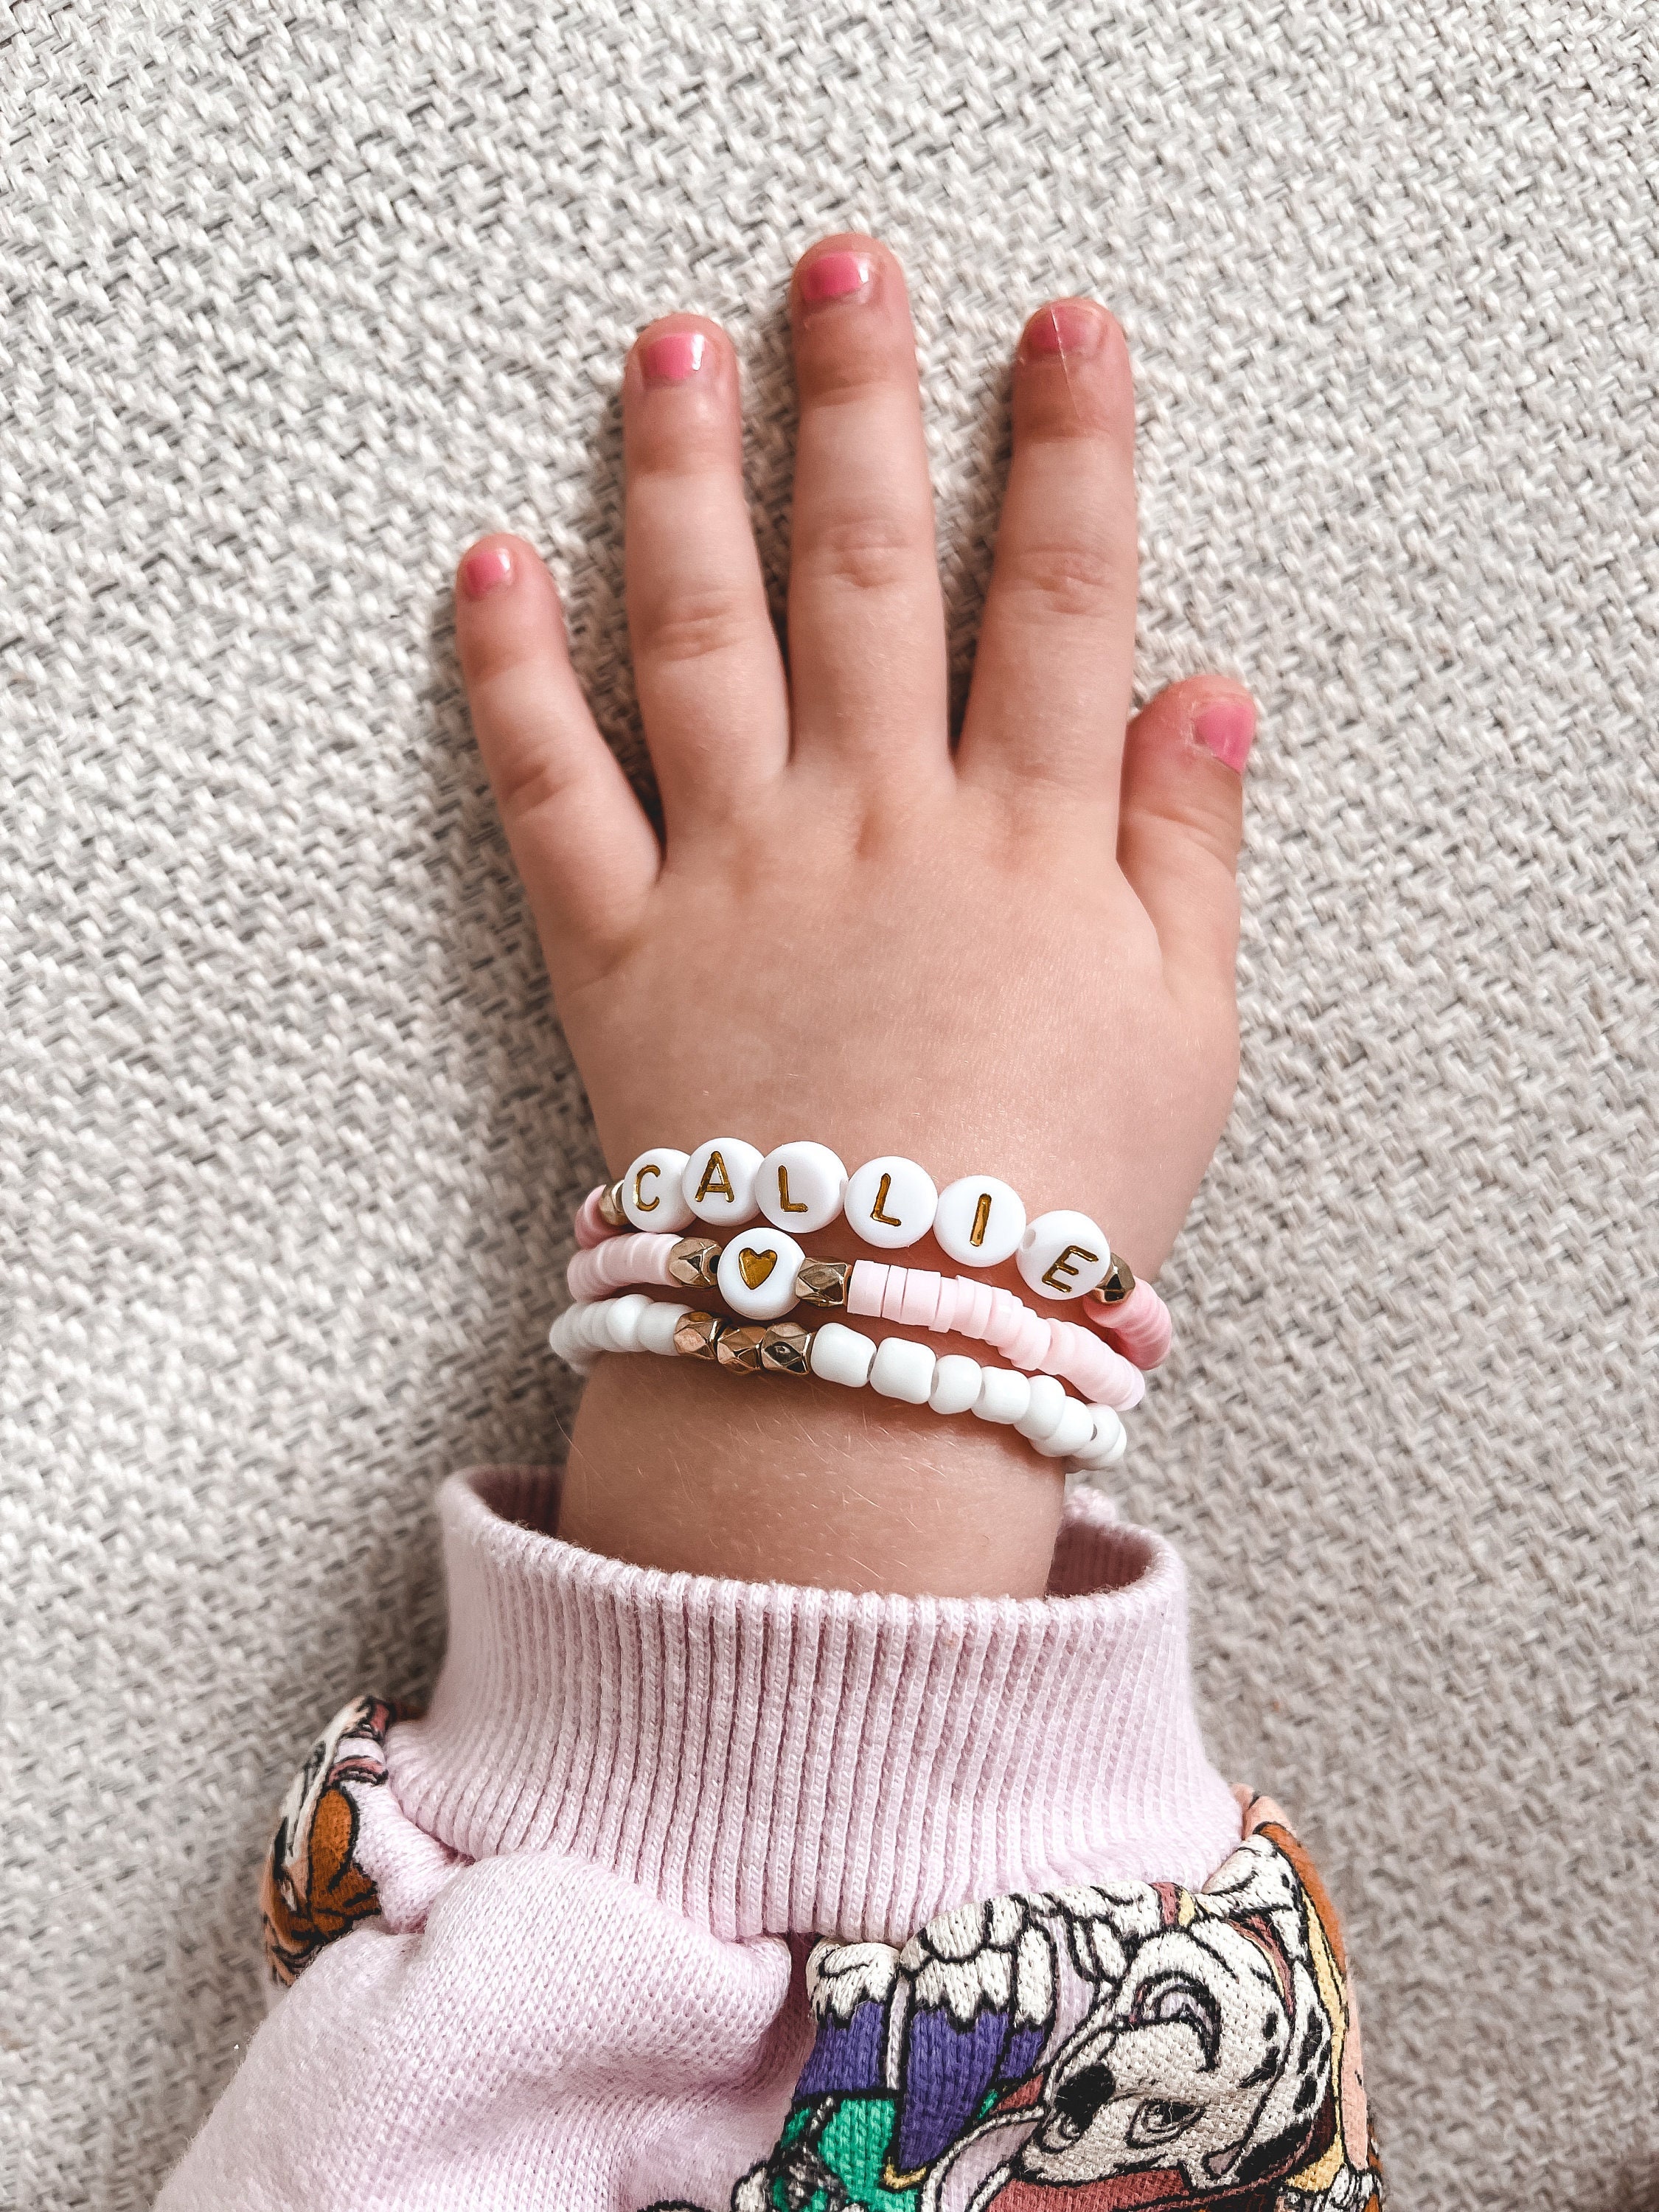 Little girl with bracelets stock photo. Image of jewellery - 69869684